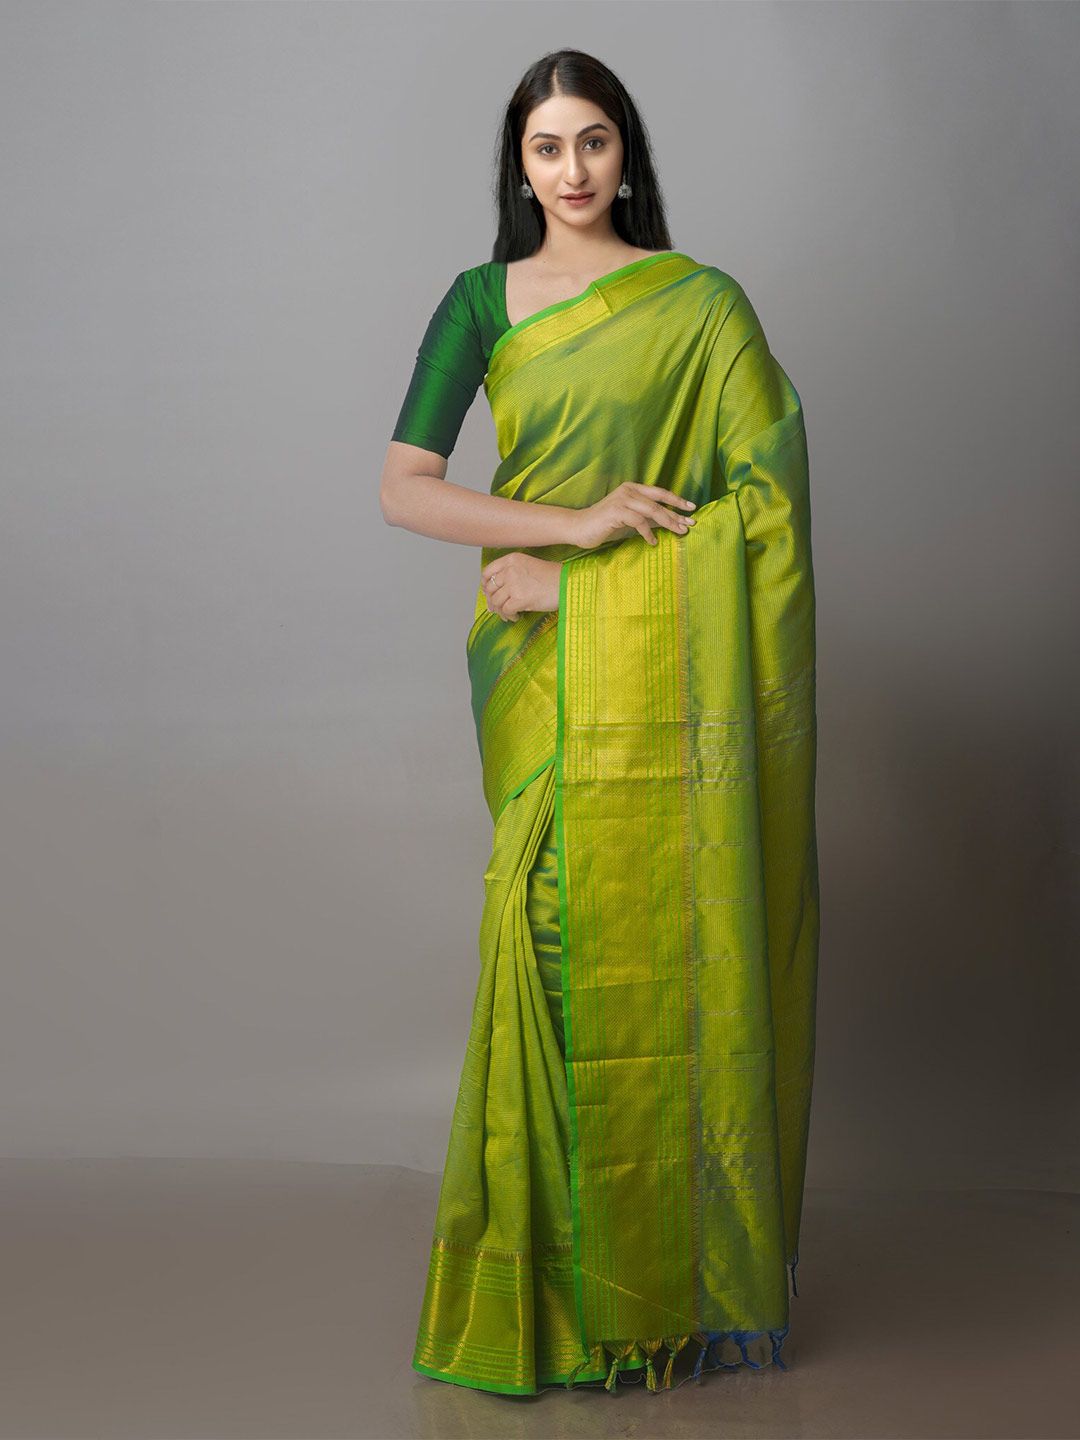 Unnati Silks Zari Mangalagiri Saree Price in India